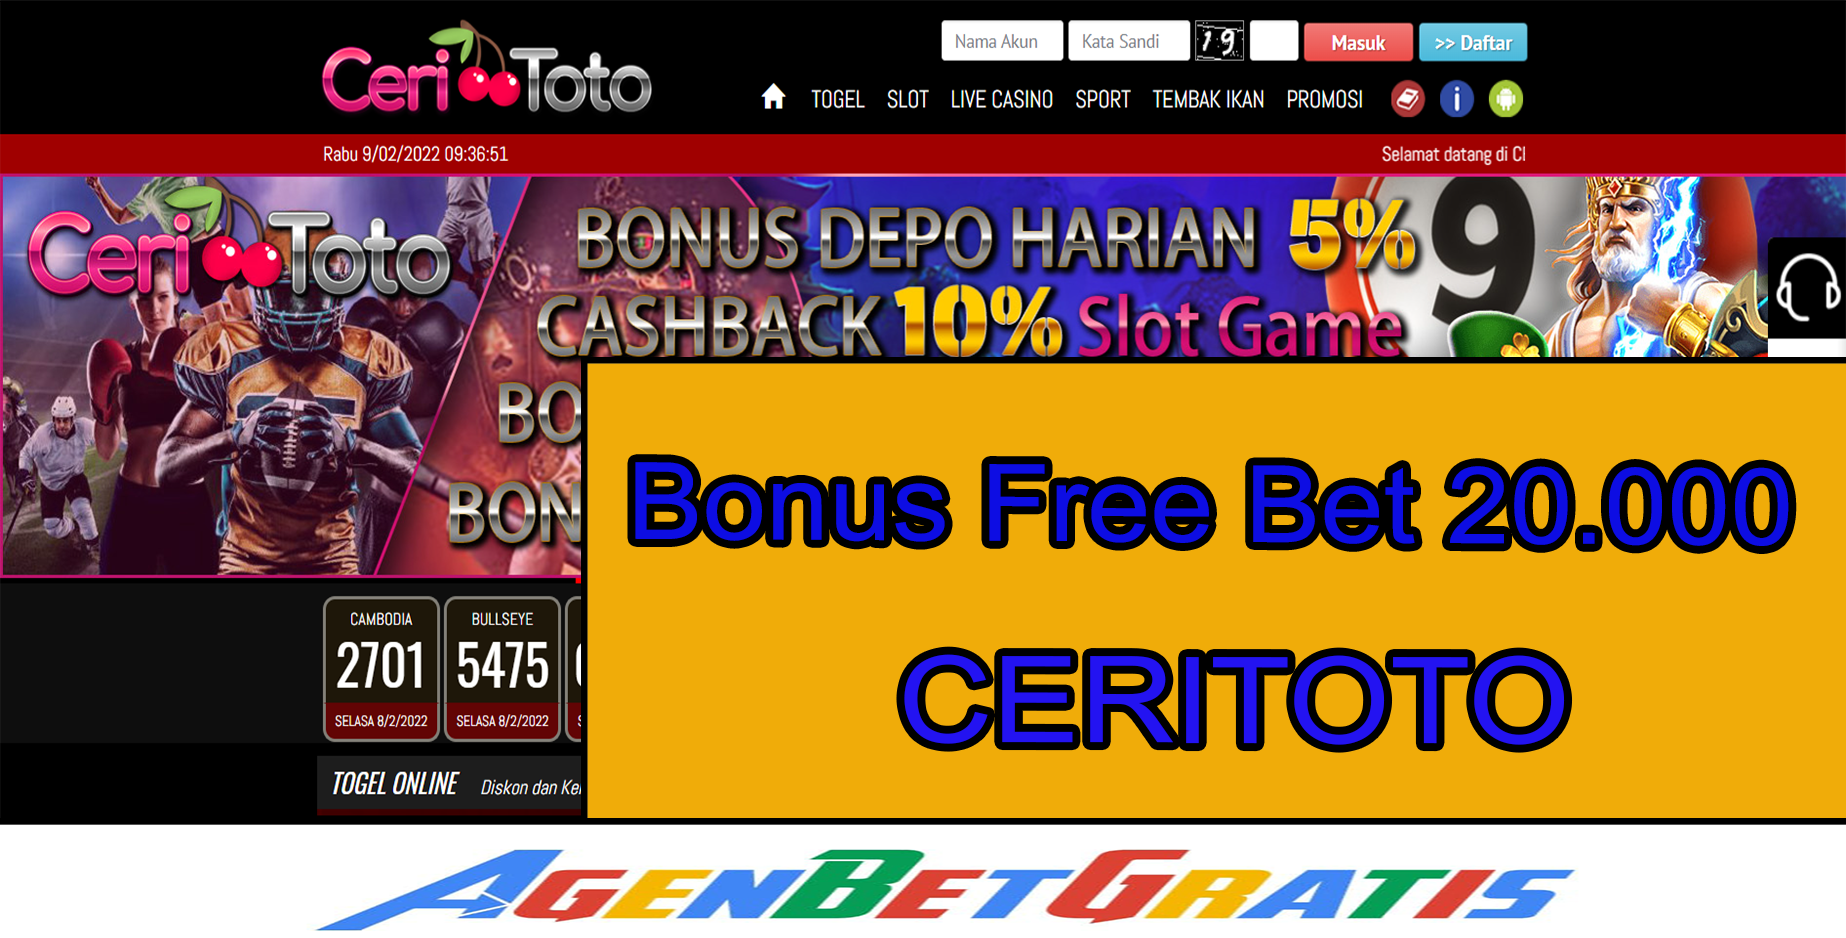 CERITOTO - Bonus FreeBet 20.000